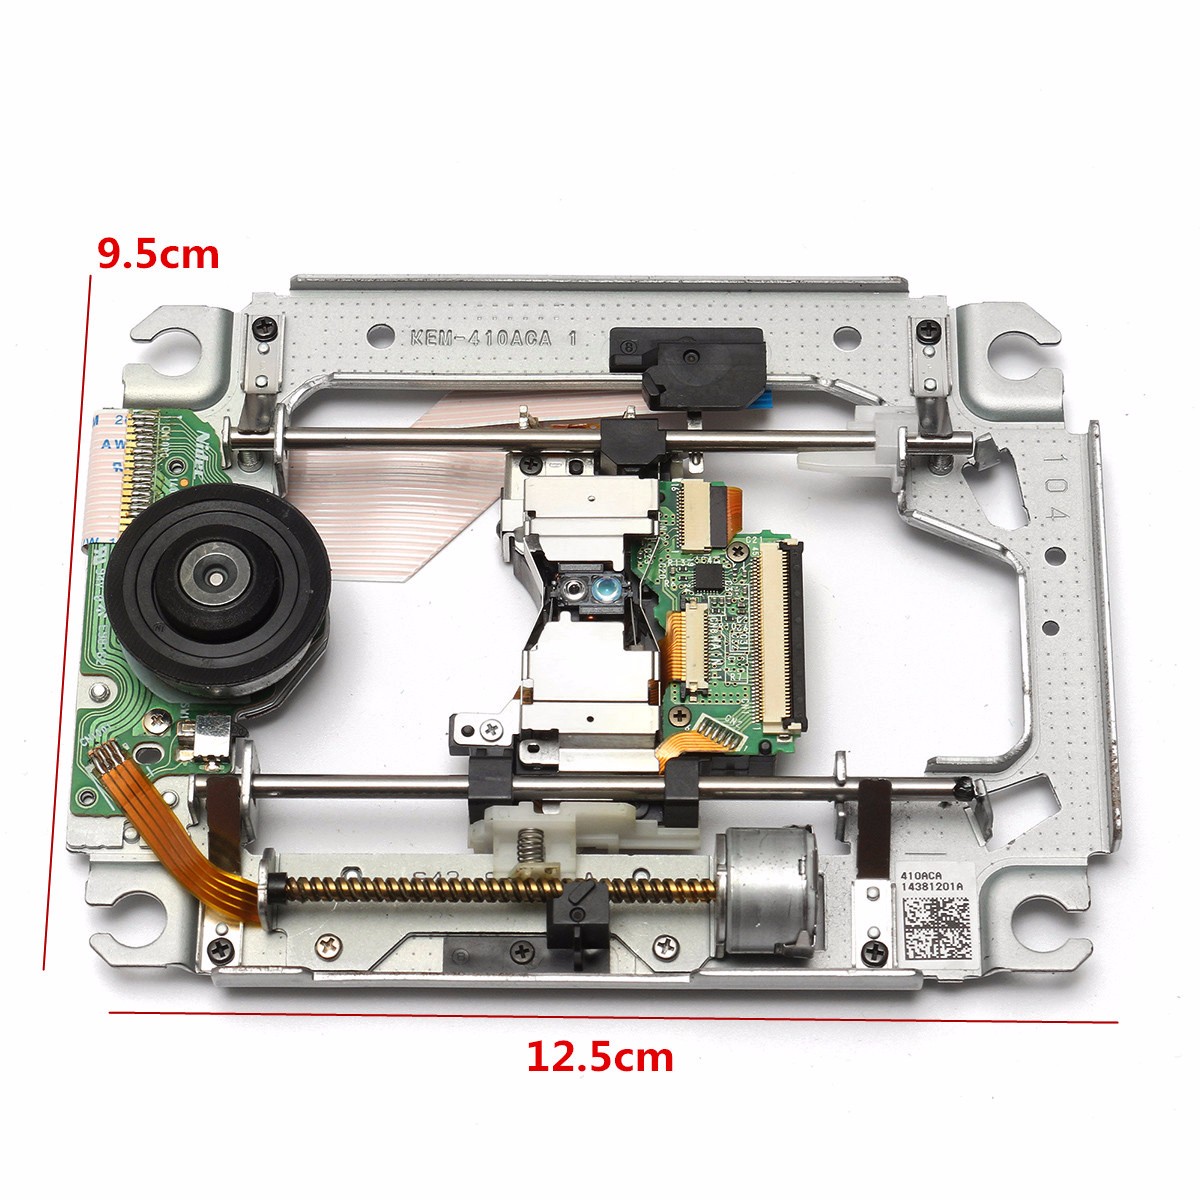 KES-410ACA/410A KEM-410ACA Laser Lens & Deck for Play Station 3 for PS3 Parts 6